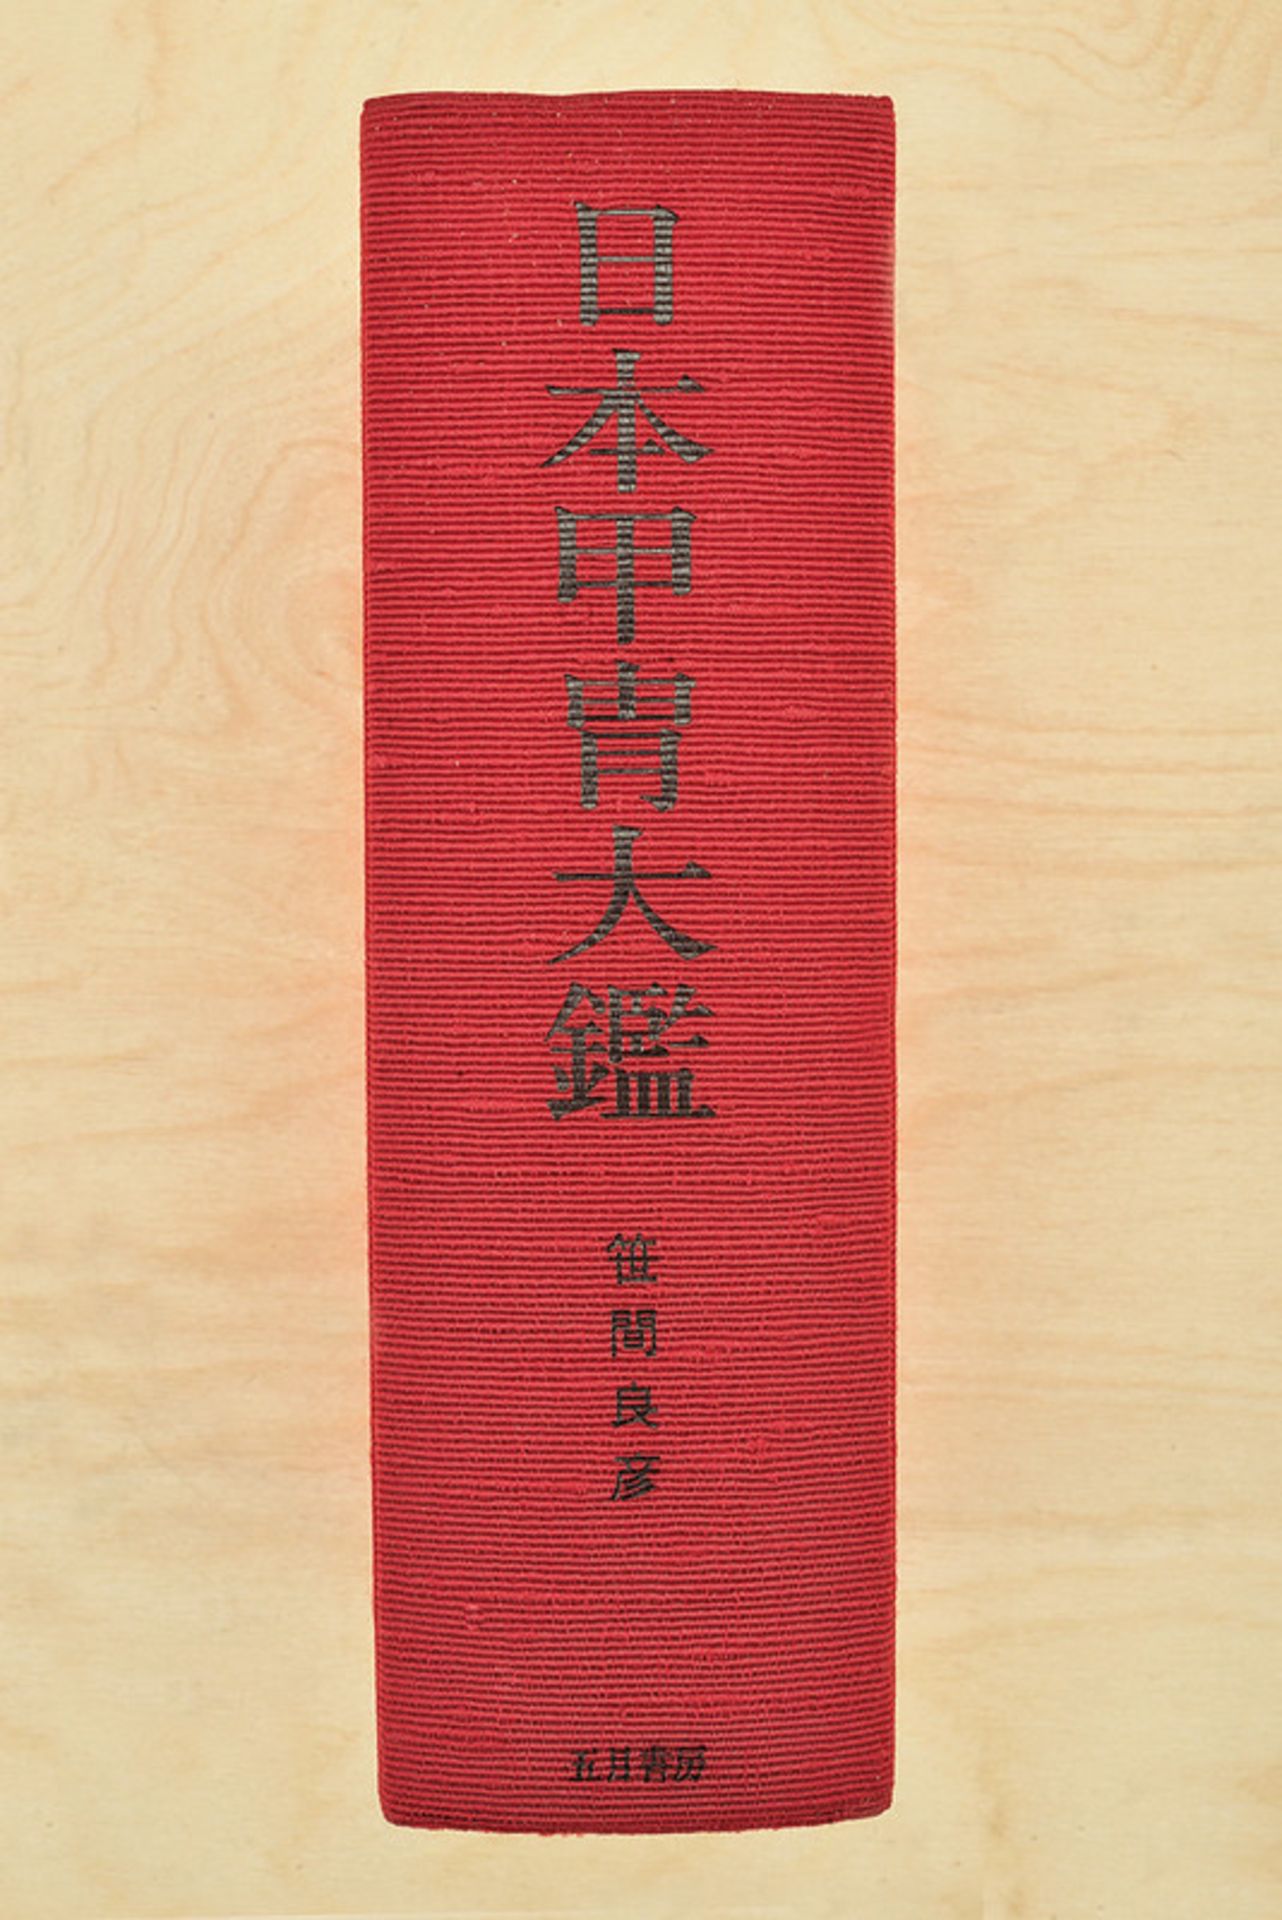 Sasama, Yoshihiko dating: 20th Century provenance: Japan "Nihon katchu taikan" (Encyclopedia of - Image 2 of 4